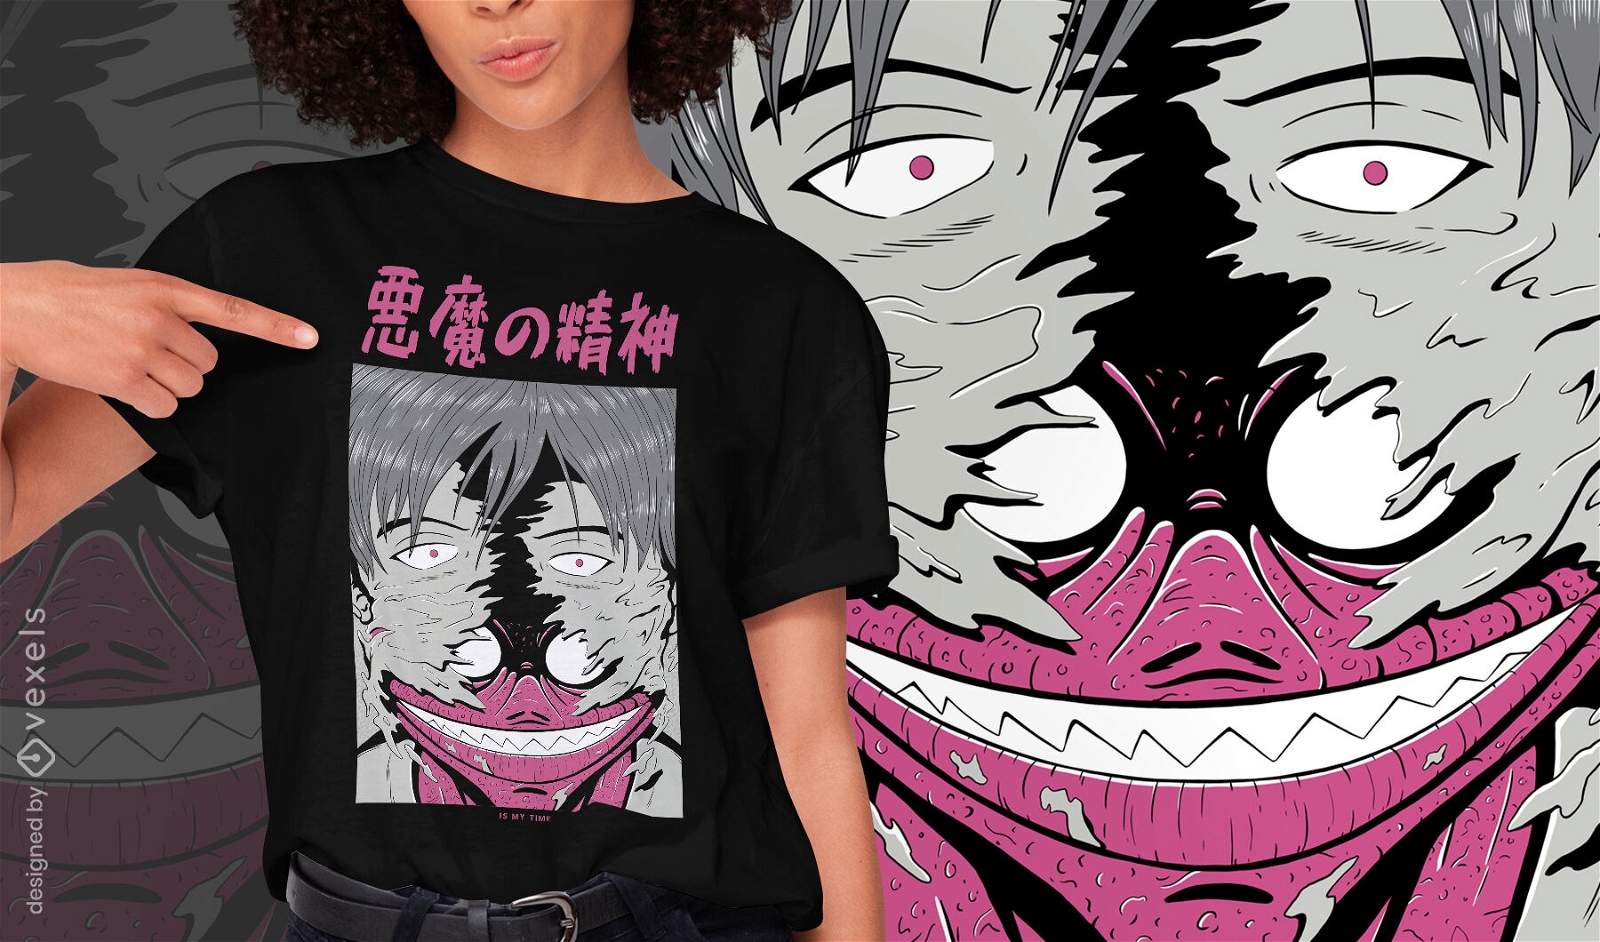 Camiseta de anime oscuro criatura esp?ritu demonio psd